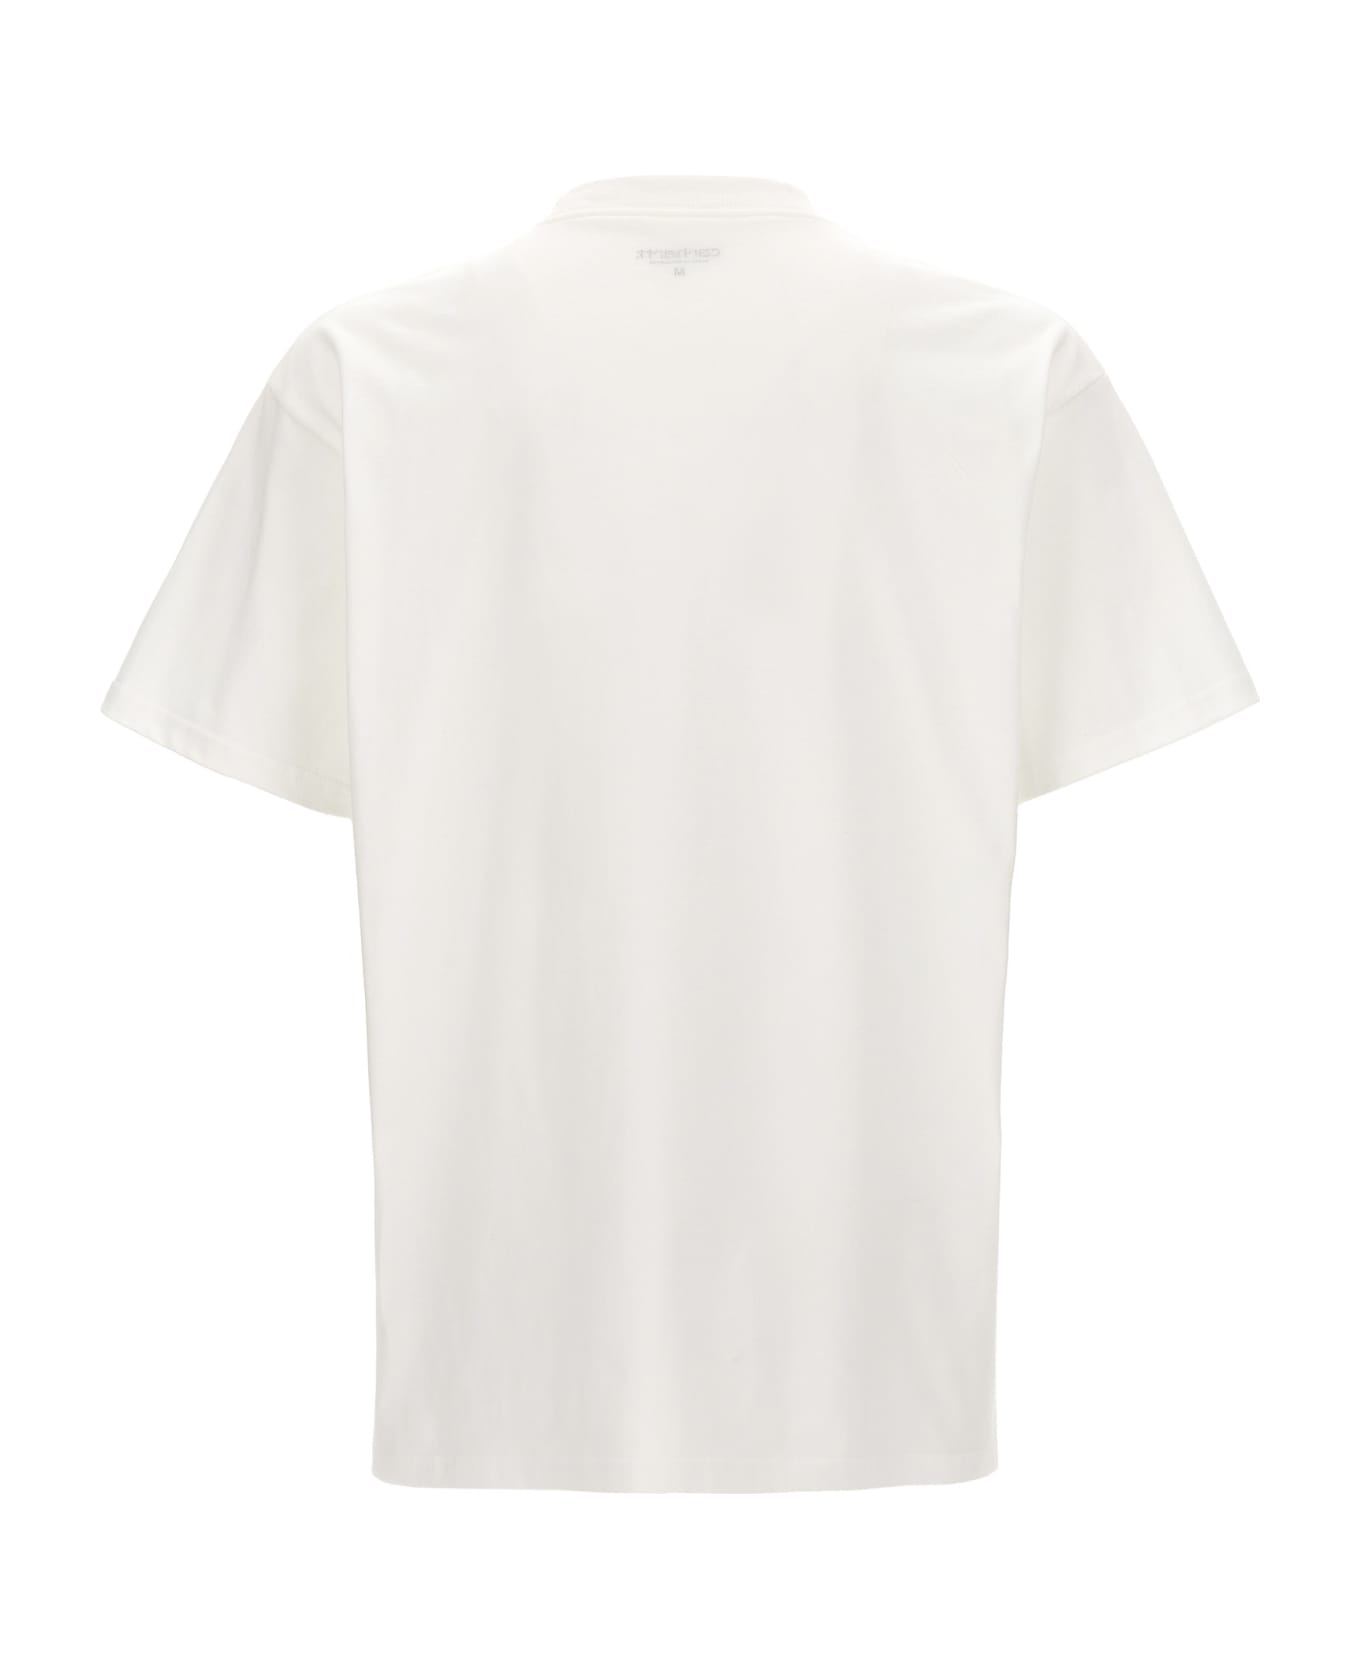 Carhartt 'drip' T-shirt - WHITE シャツ